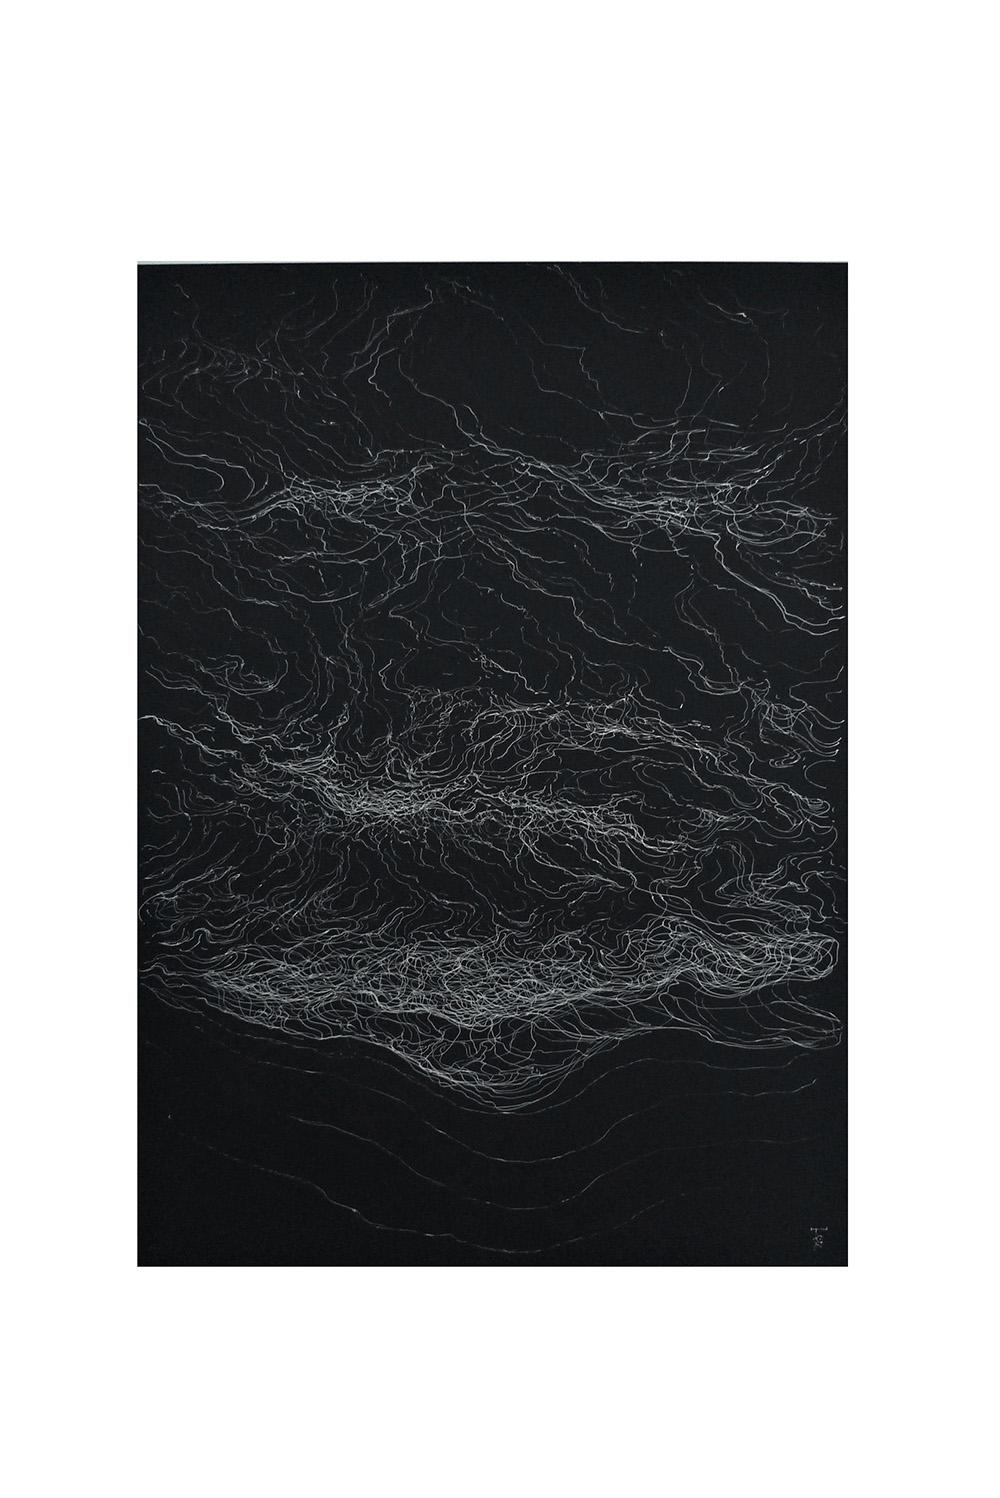 Element I by Franco Salas Borquez - Work on paper, ocean waves, black & silver 1